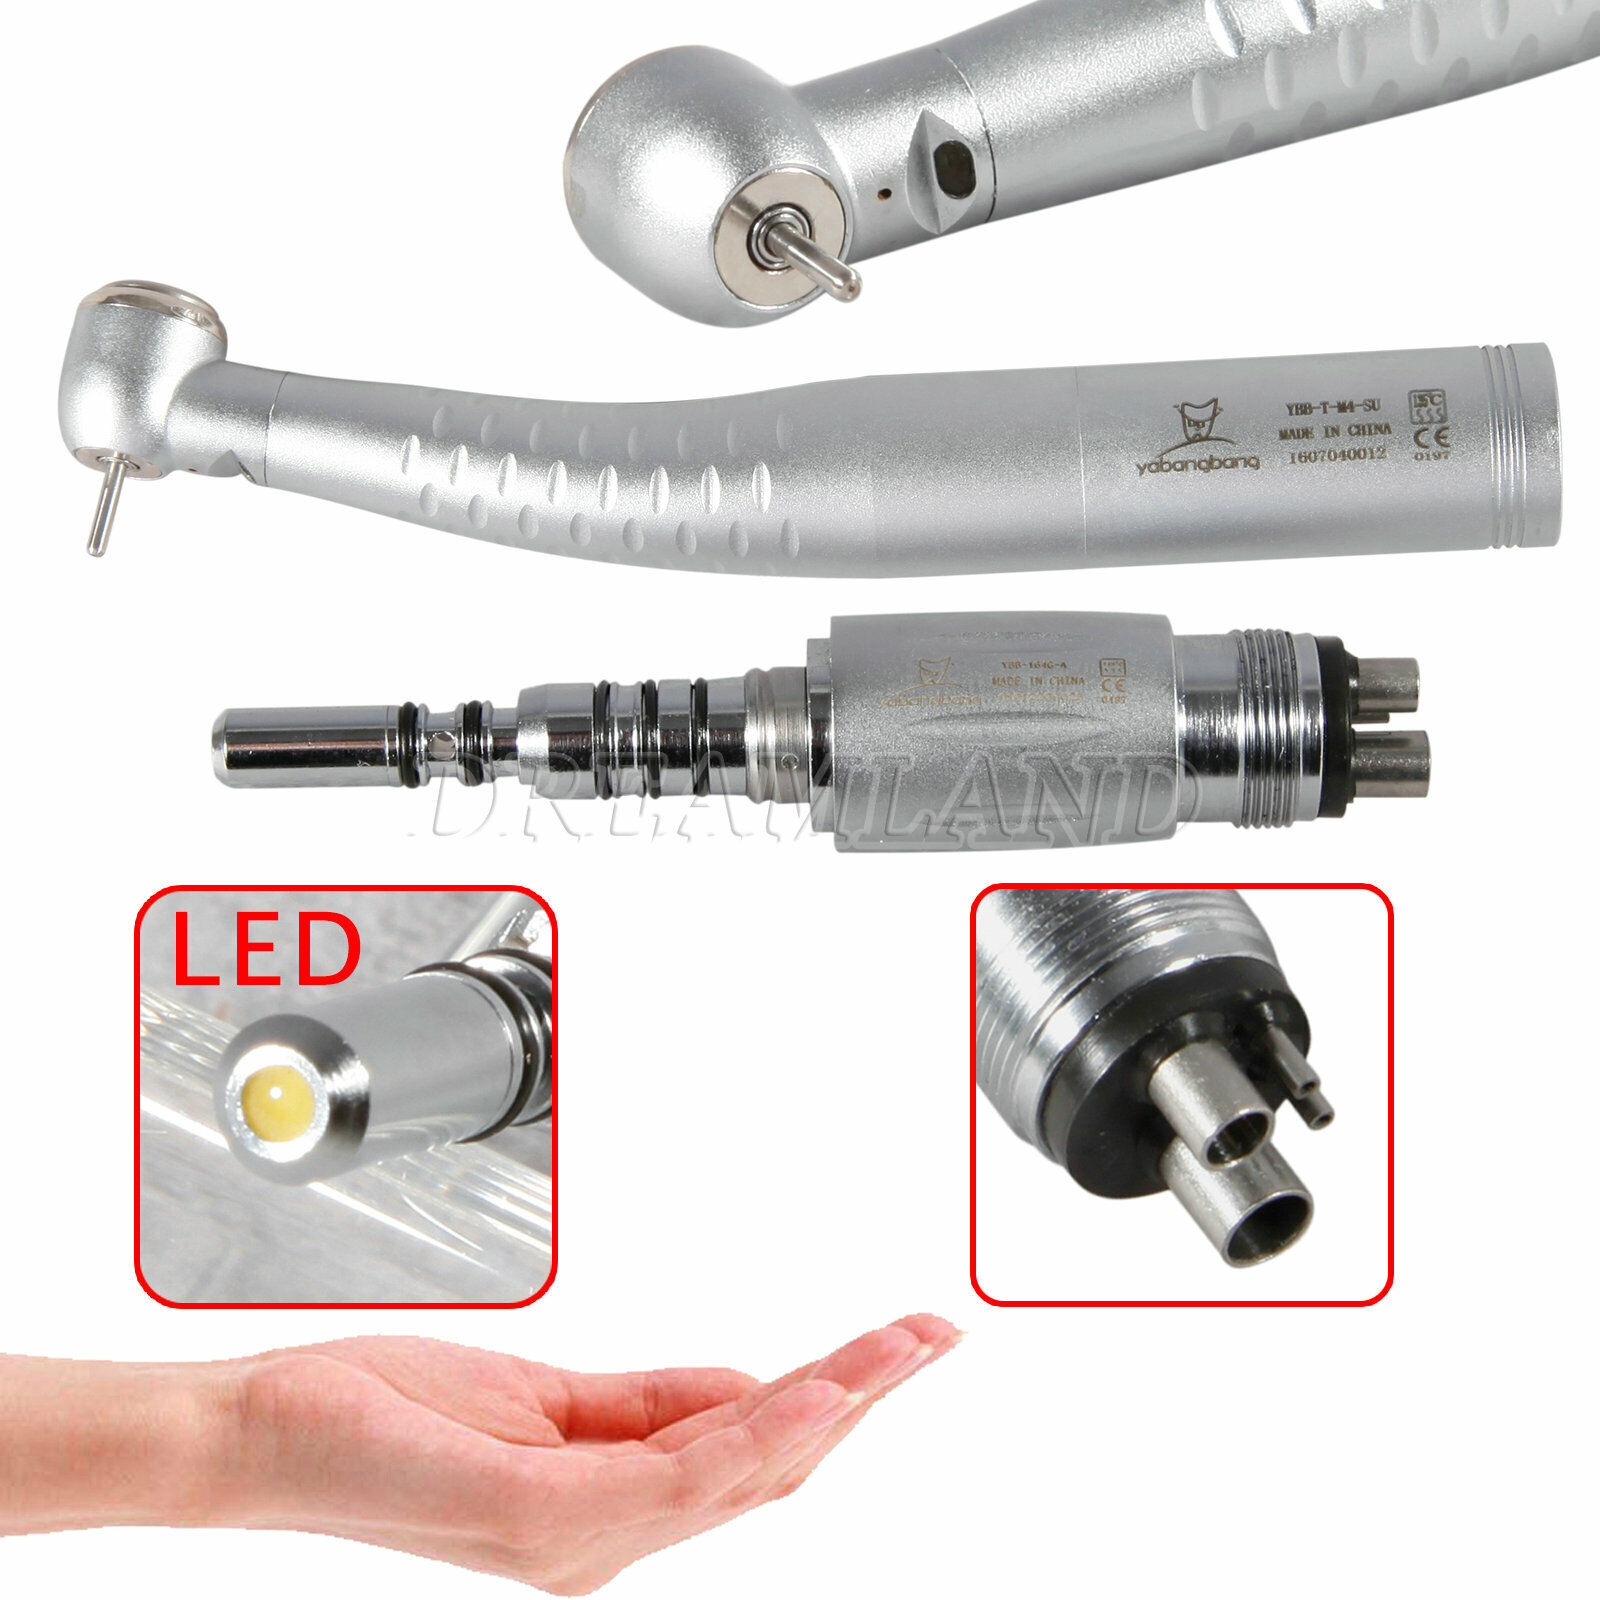 Dental Fiber Optic LED Handpiece High Speed / LED Quick Coupler 2/4/6 Holes USA Tanie zapasy